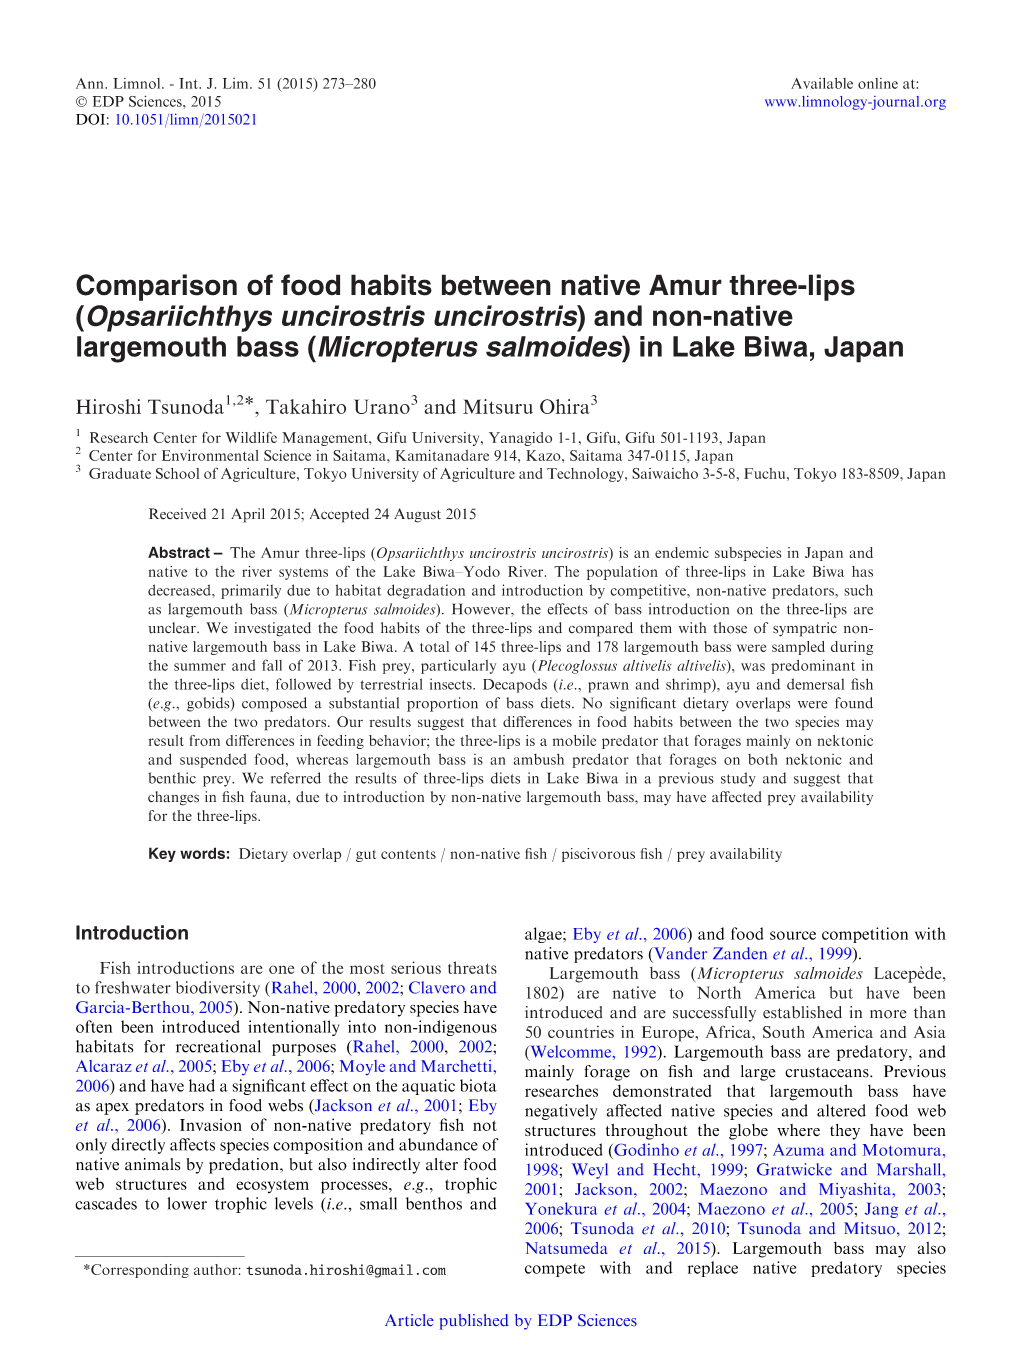 Comparison of Food Habits Between Native Amur Three-Lips